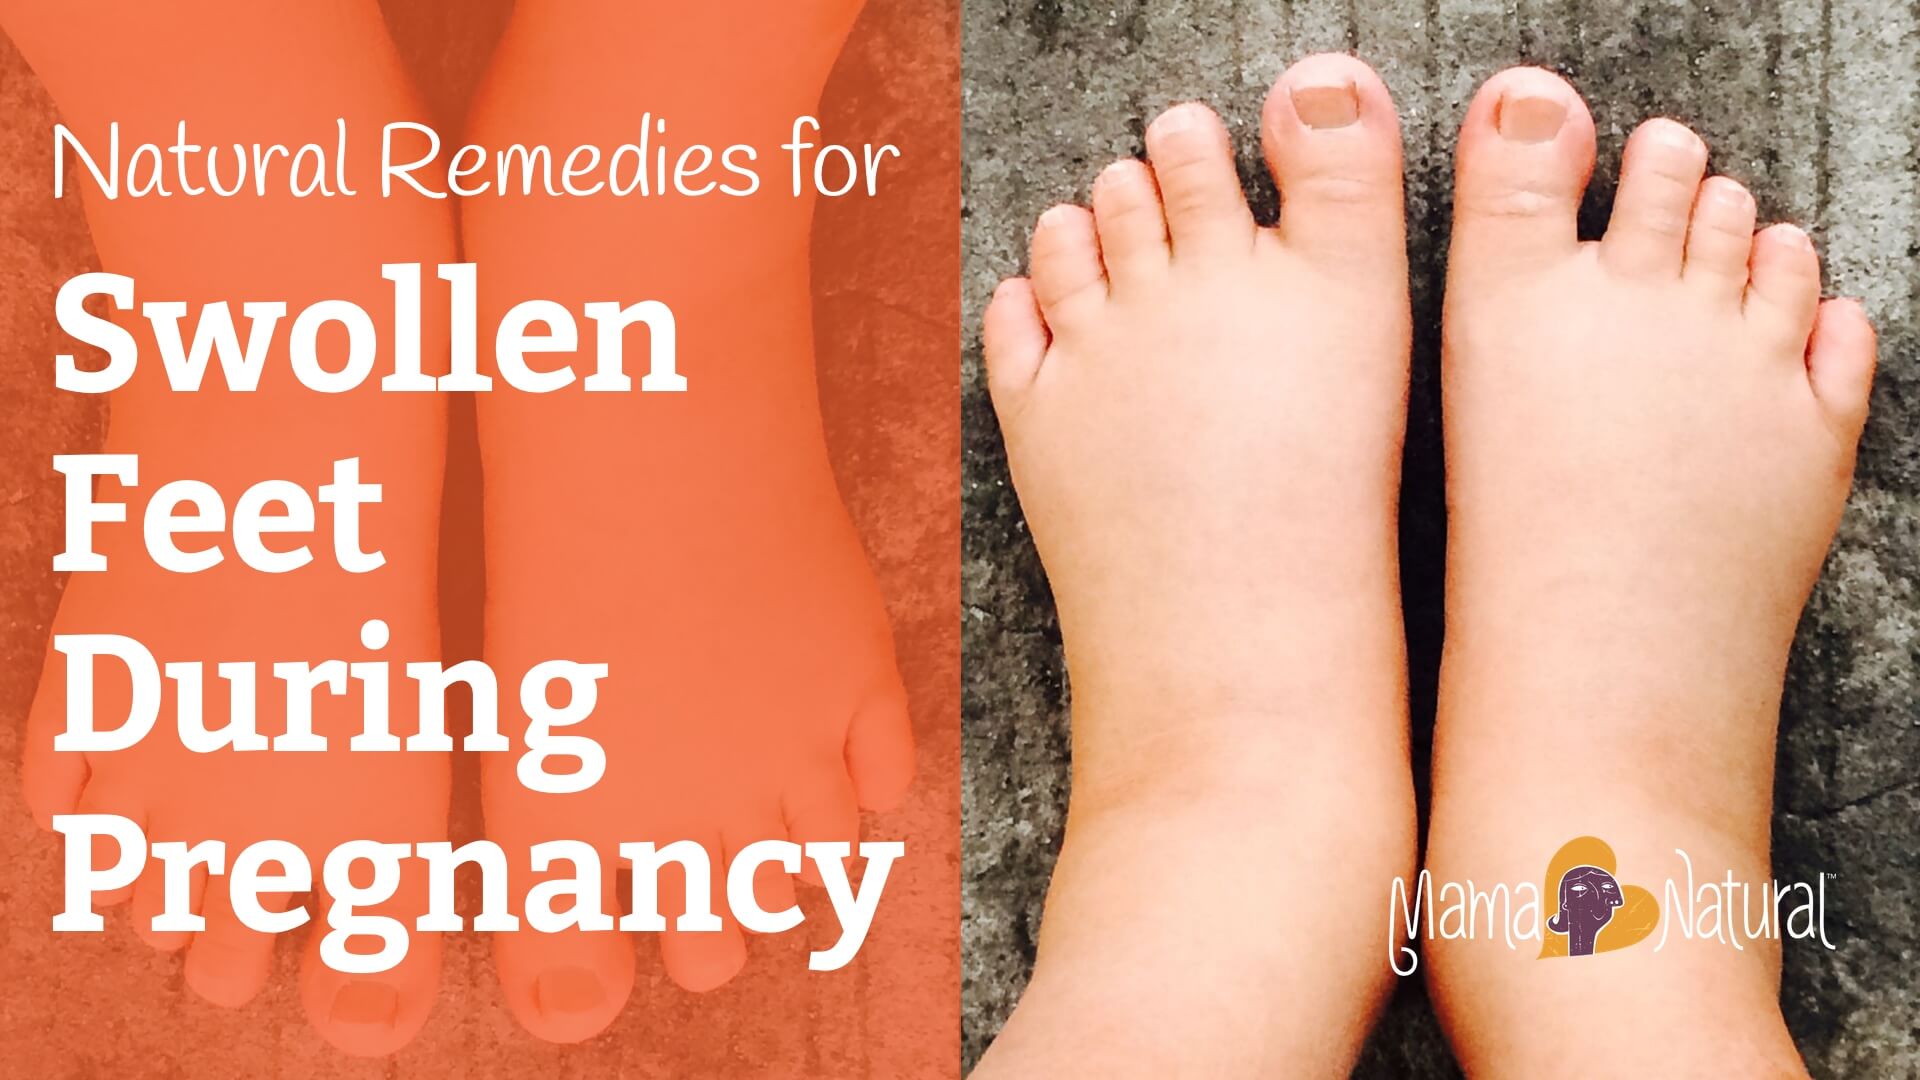 Swollen Feet During Pregnancy Natural Remedies